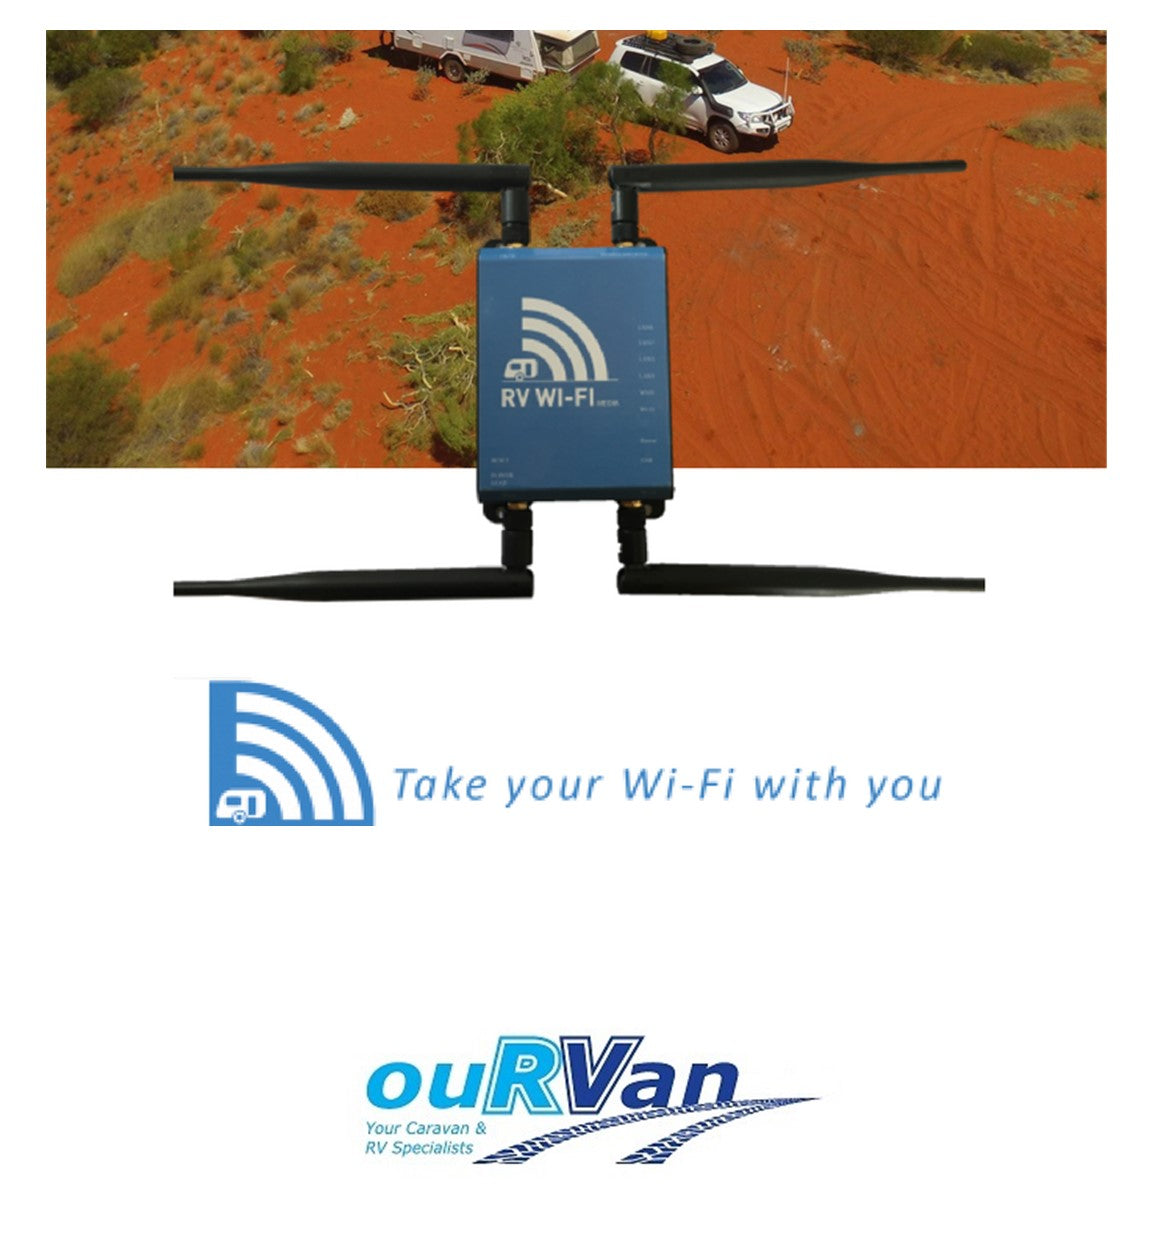 Rv Wifi+4gx Portable Caravan Wifi Internet - Rvwifi+4gx